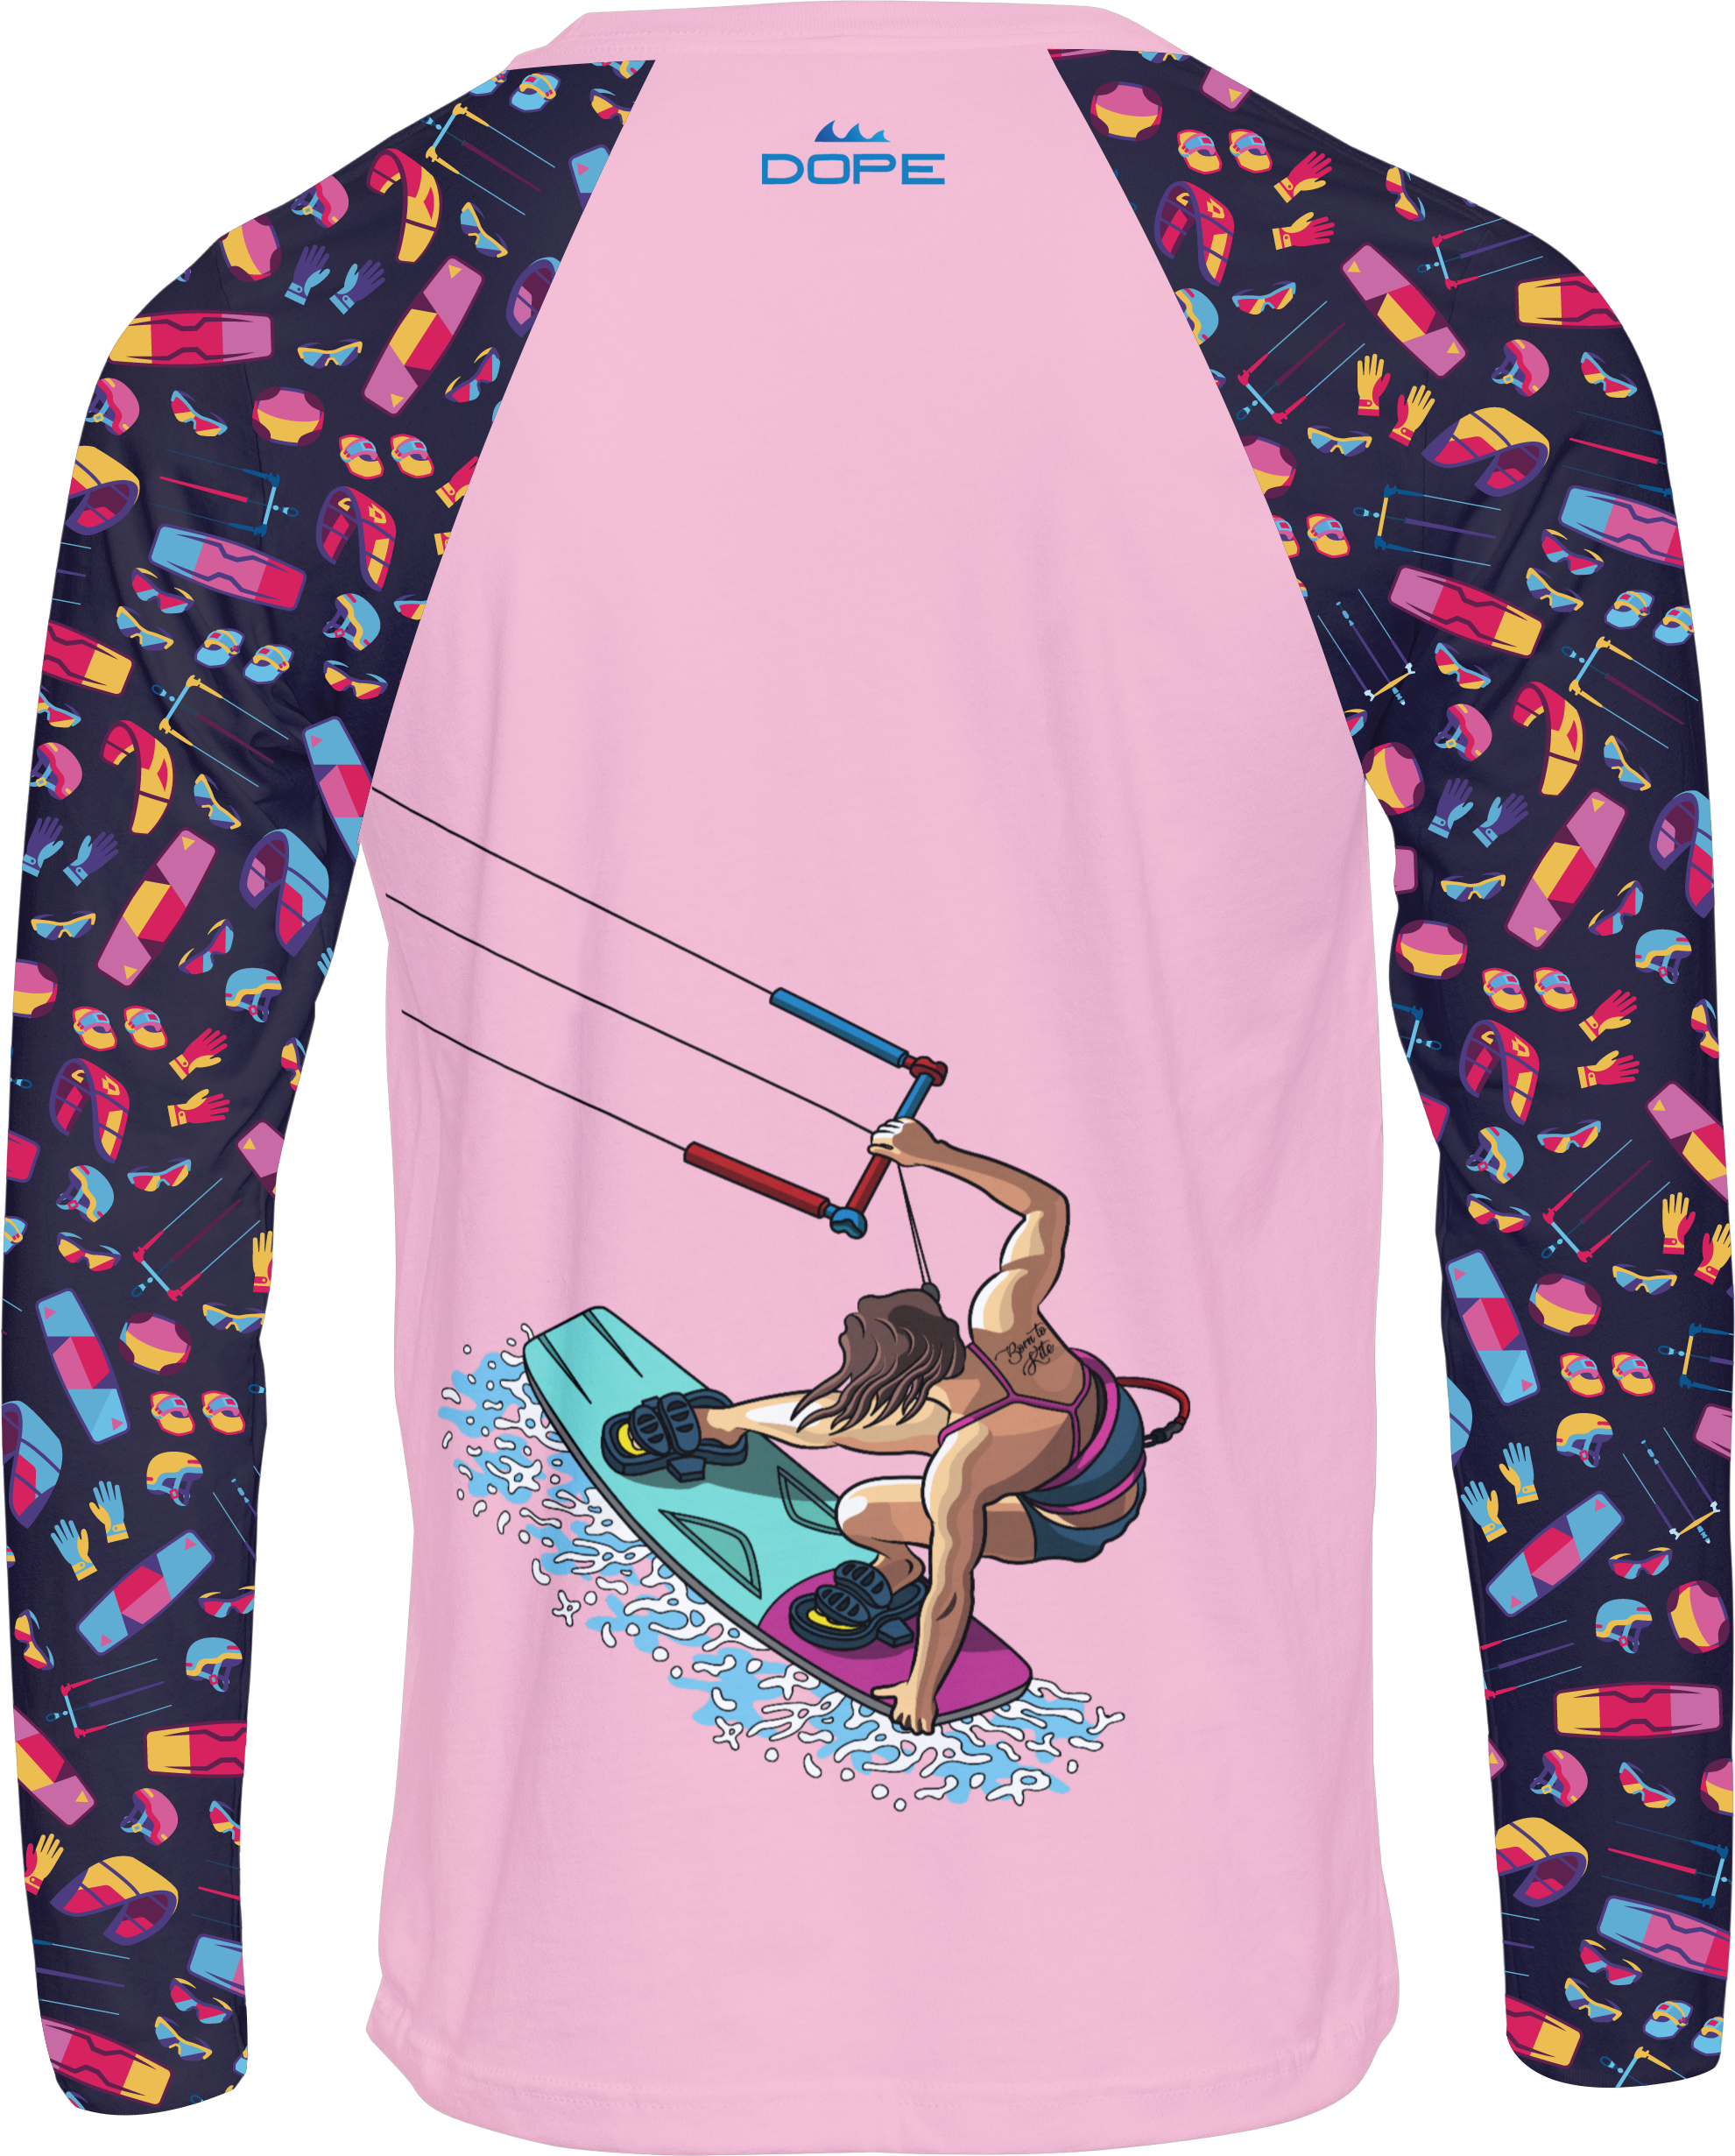 Kitesurfing - Long Sleeve Performance Female T-shirt